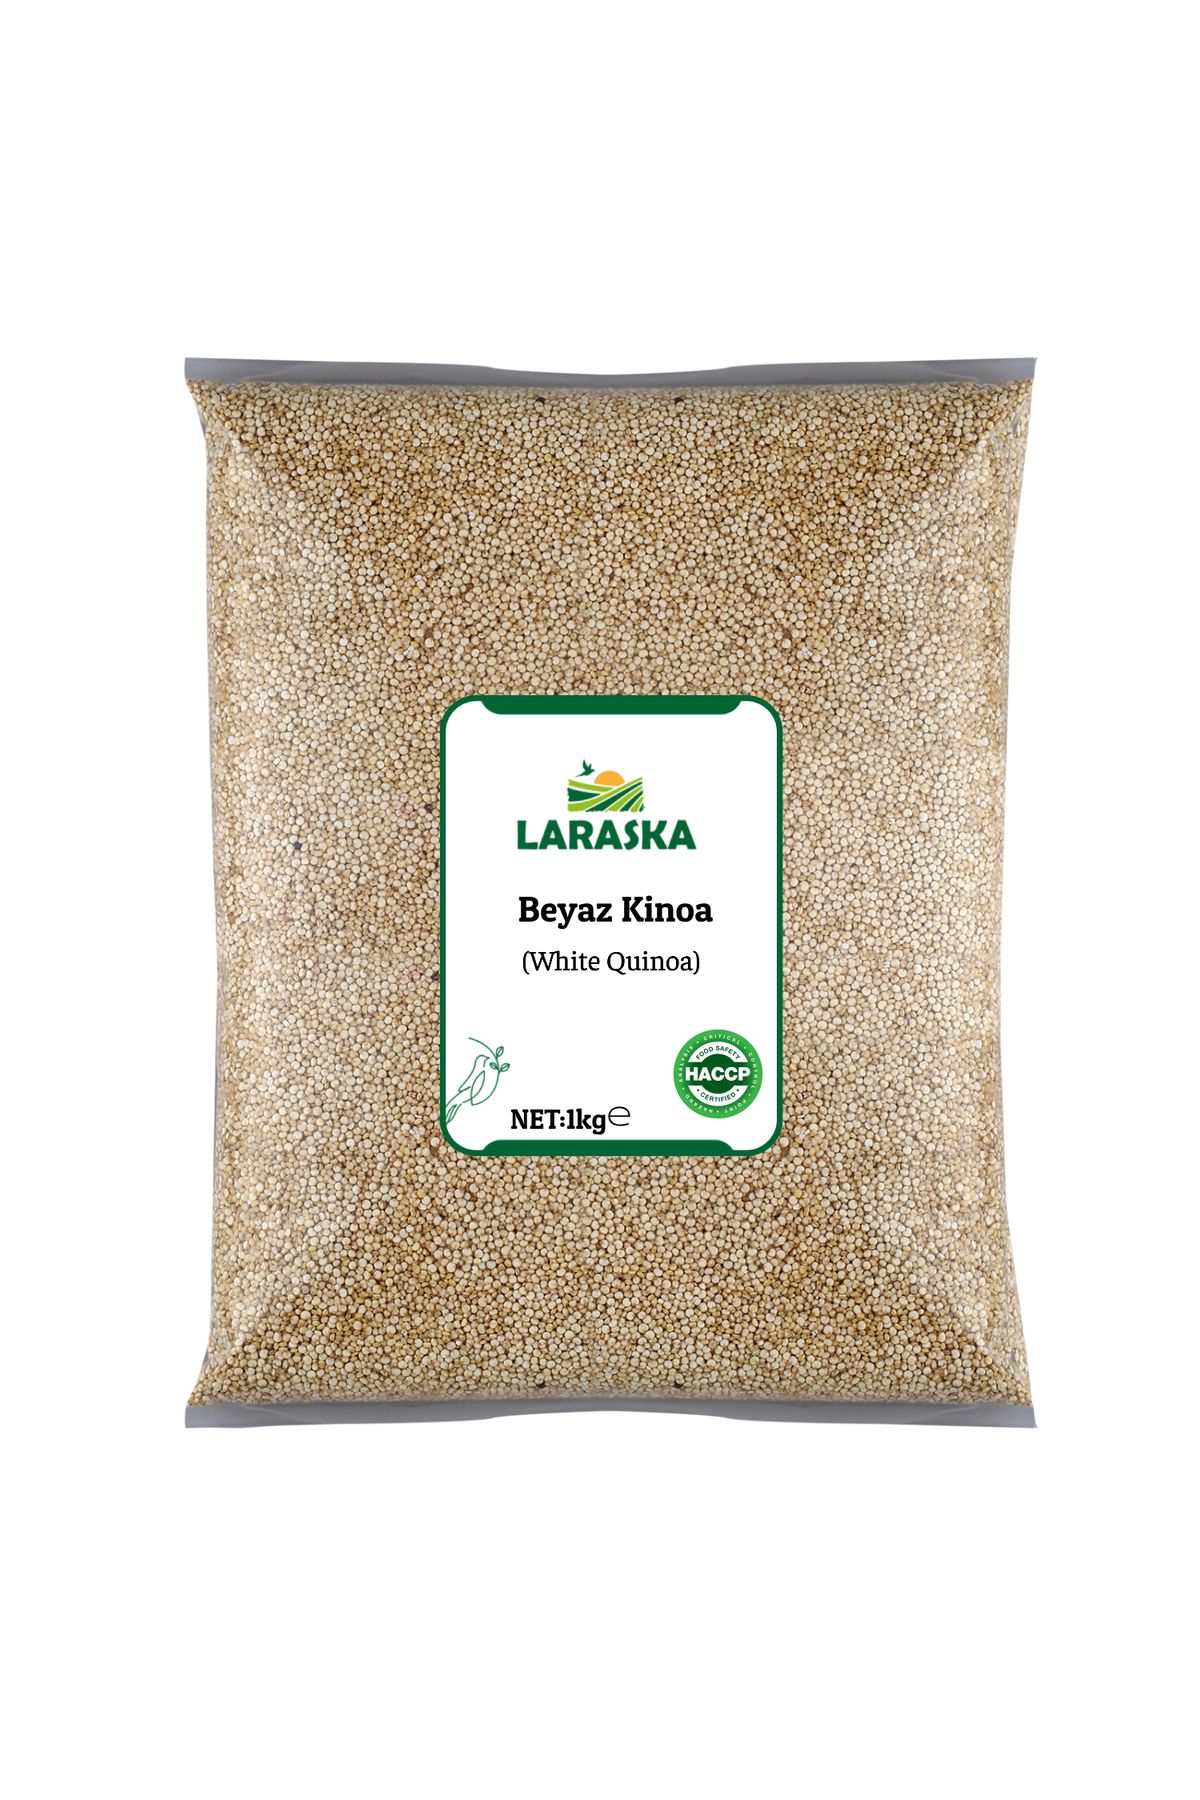 Laraska Beyaz Kinoa 1kg - Natural White Quinoa 1kg- Katkı Maddesiz Doğal